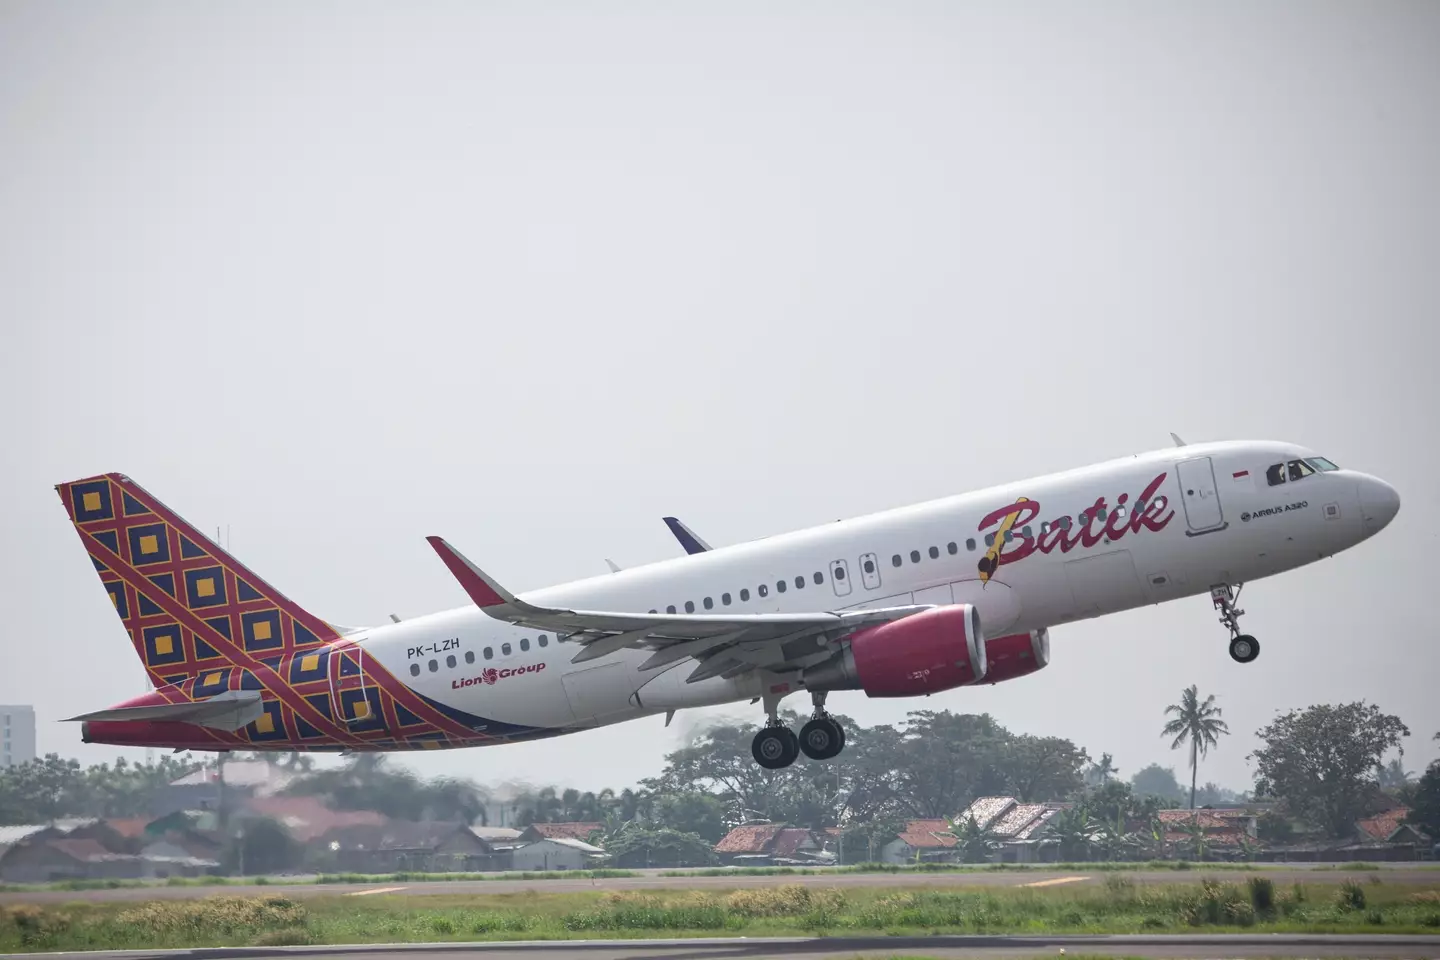 The incident took place on a Batik Air flight.